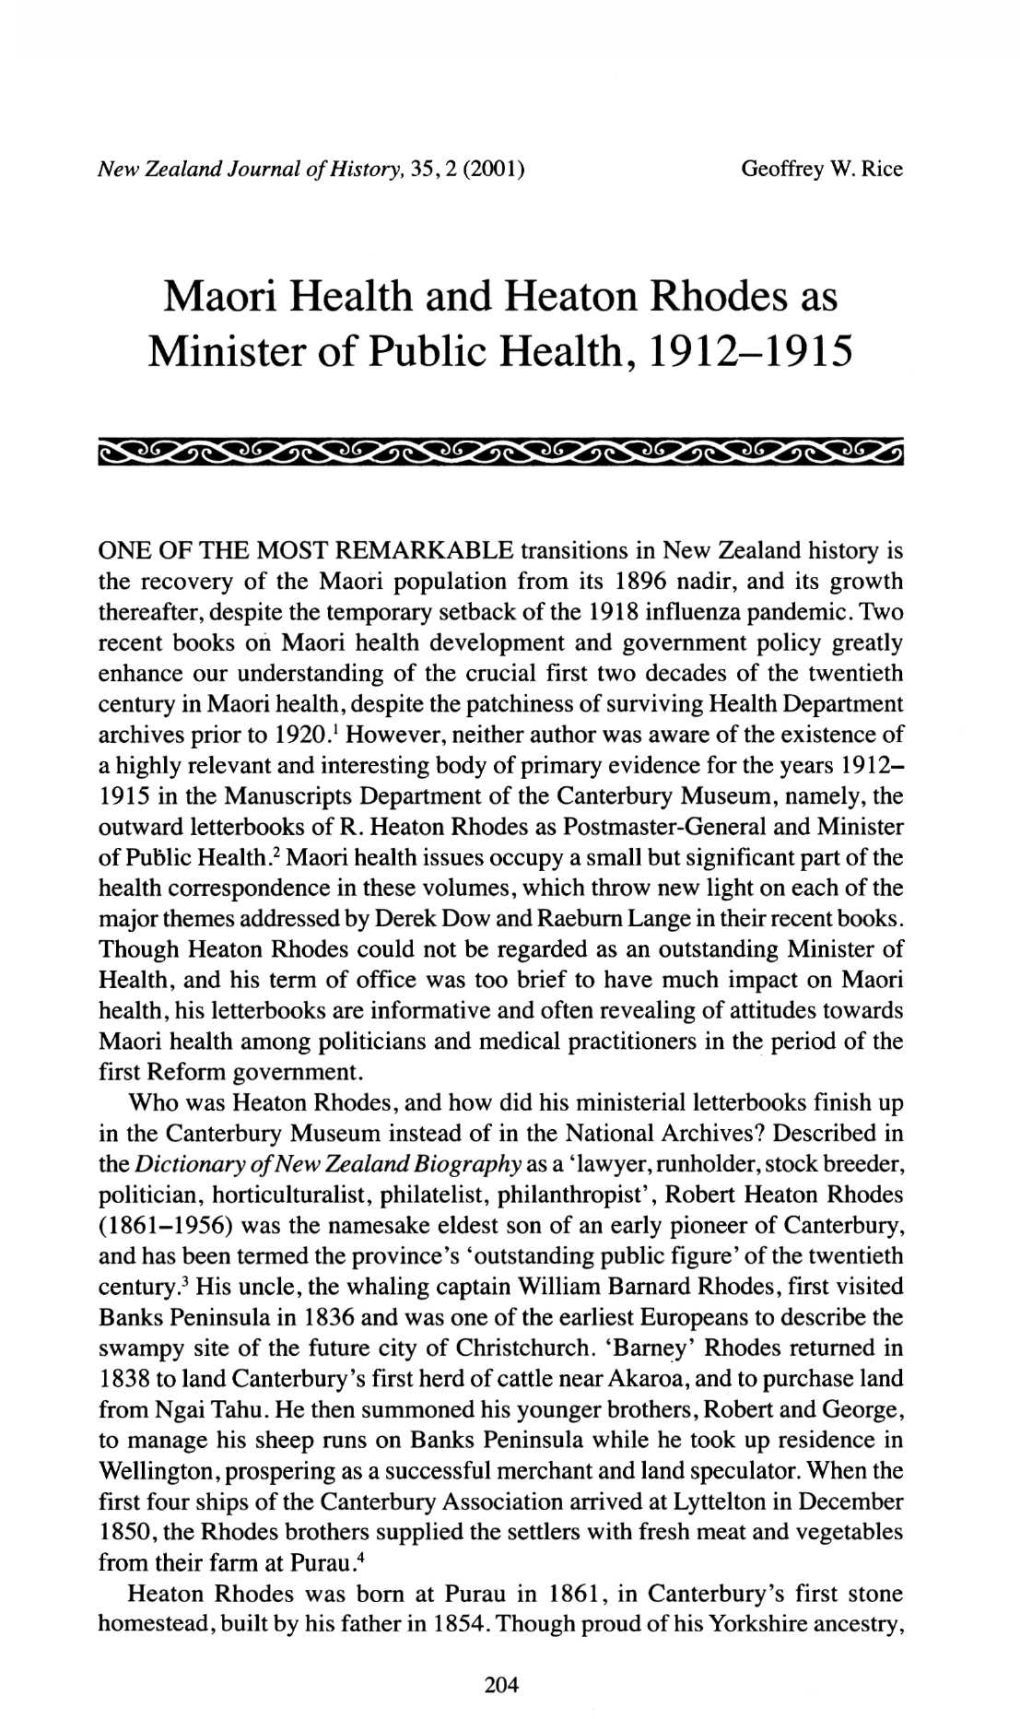 Maori Health and Heaton Rhodes As Minister of Public Health, 1912-1915